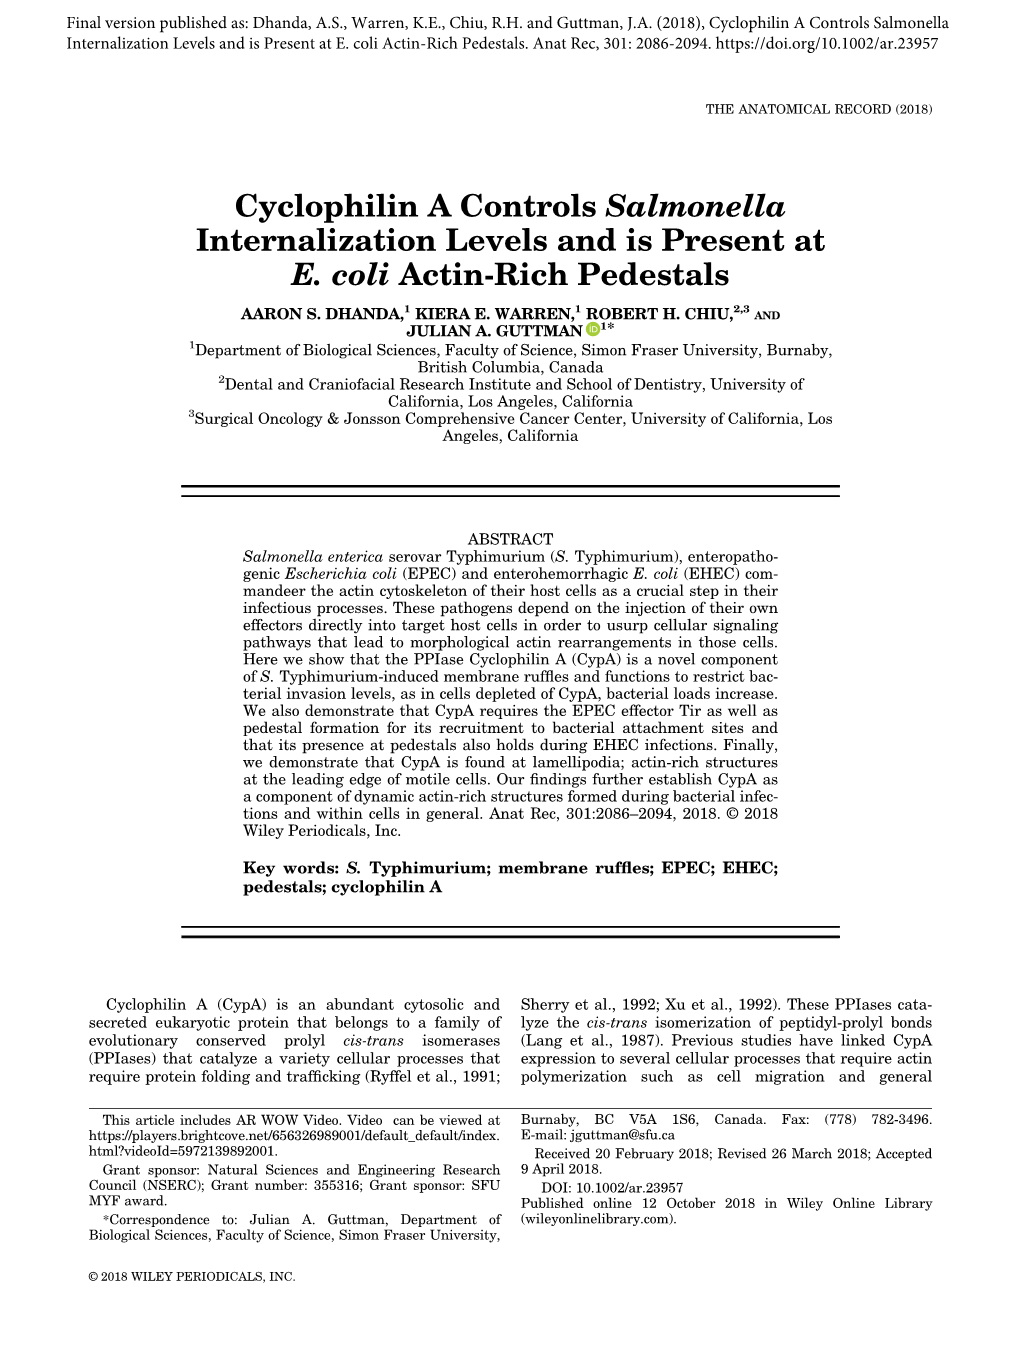 Cyclophilin a Controls Salmonella Internalization Levels and Is Present at E. Coli Actin‐Rich Pedestals